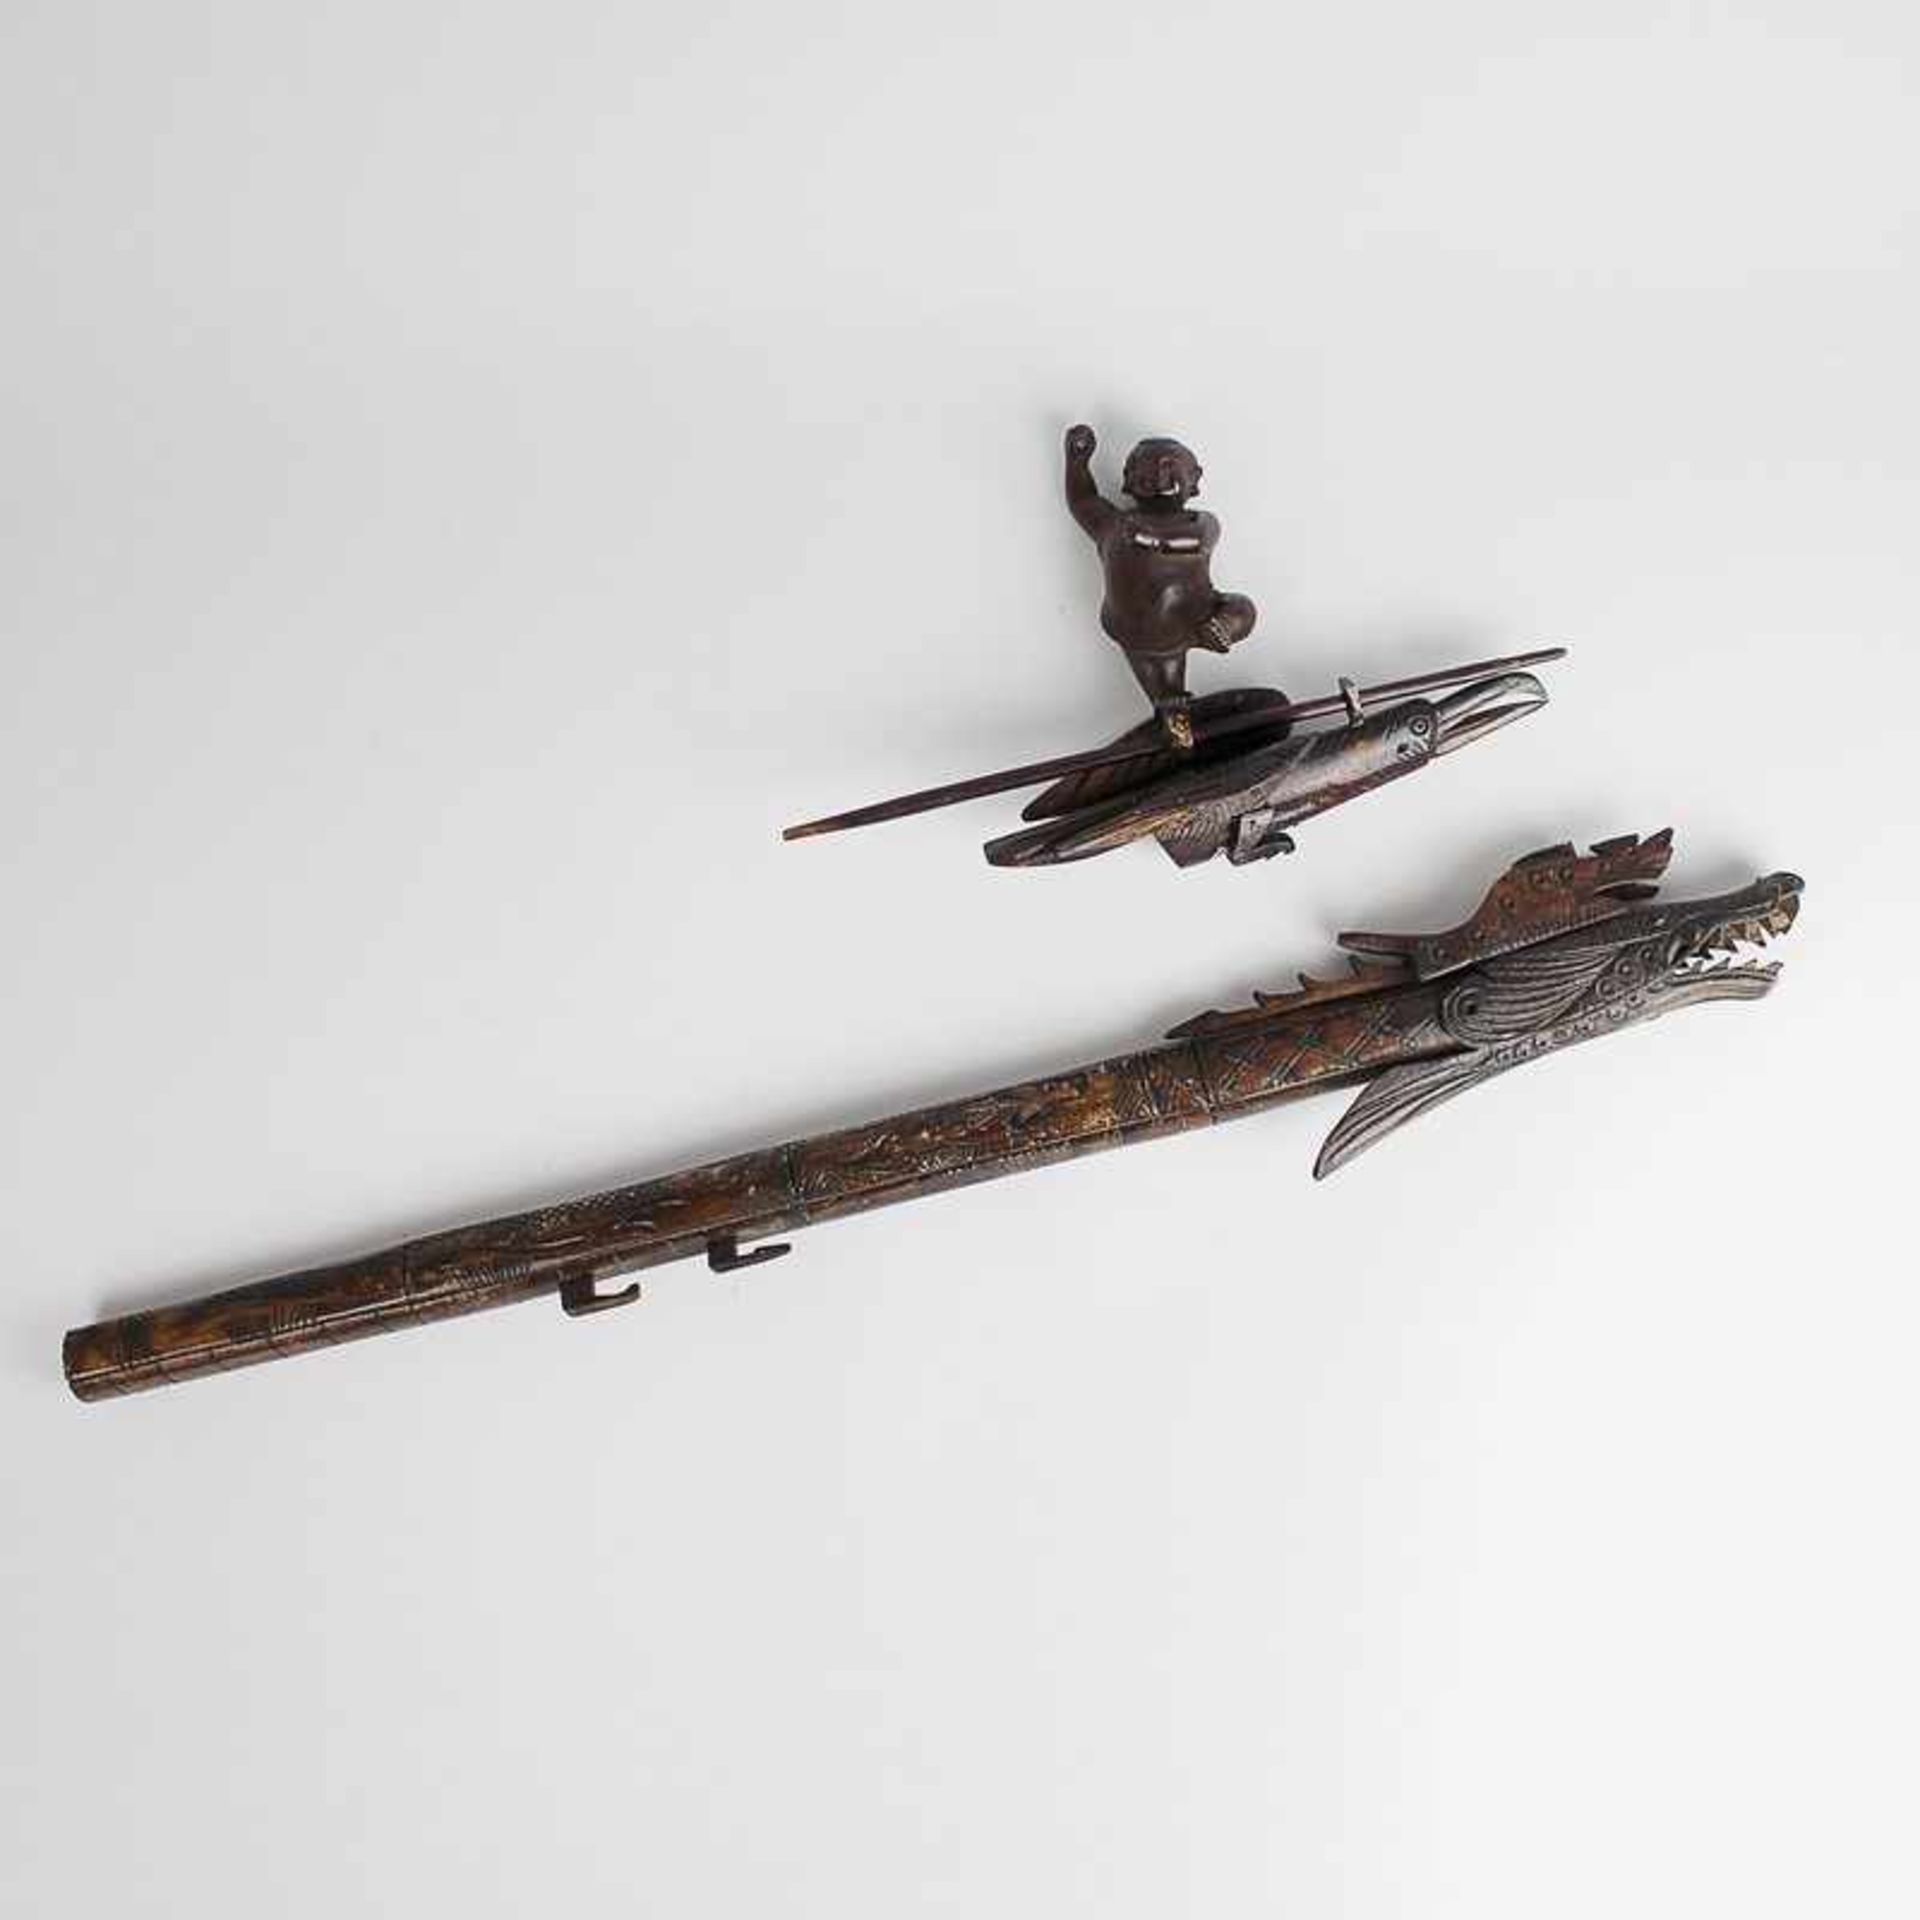 Holzschnitzerei 20.Jh., wohl Pfeiffe, geschnitzter Drachenkopf, versch. Motive, Teil lose, liegt